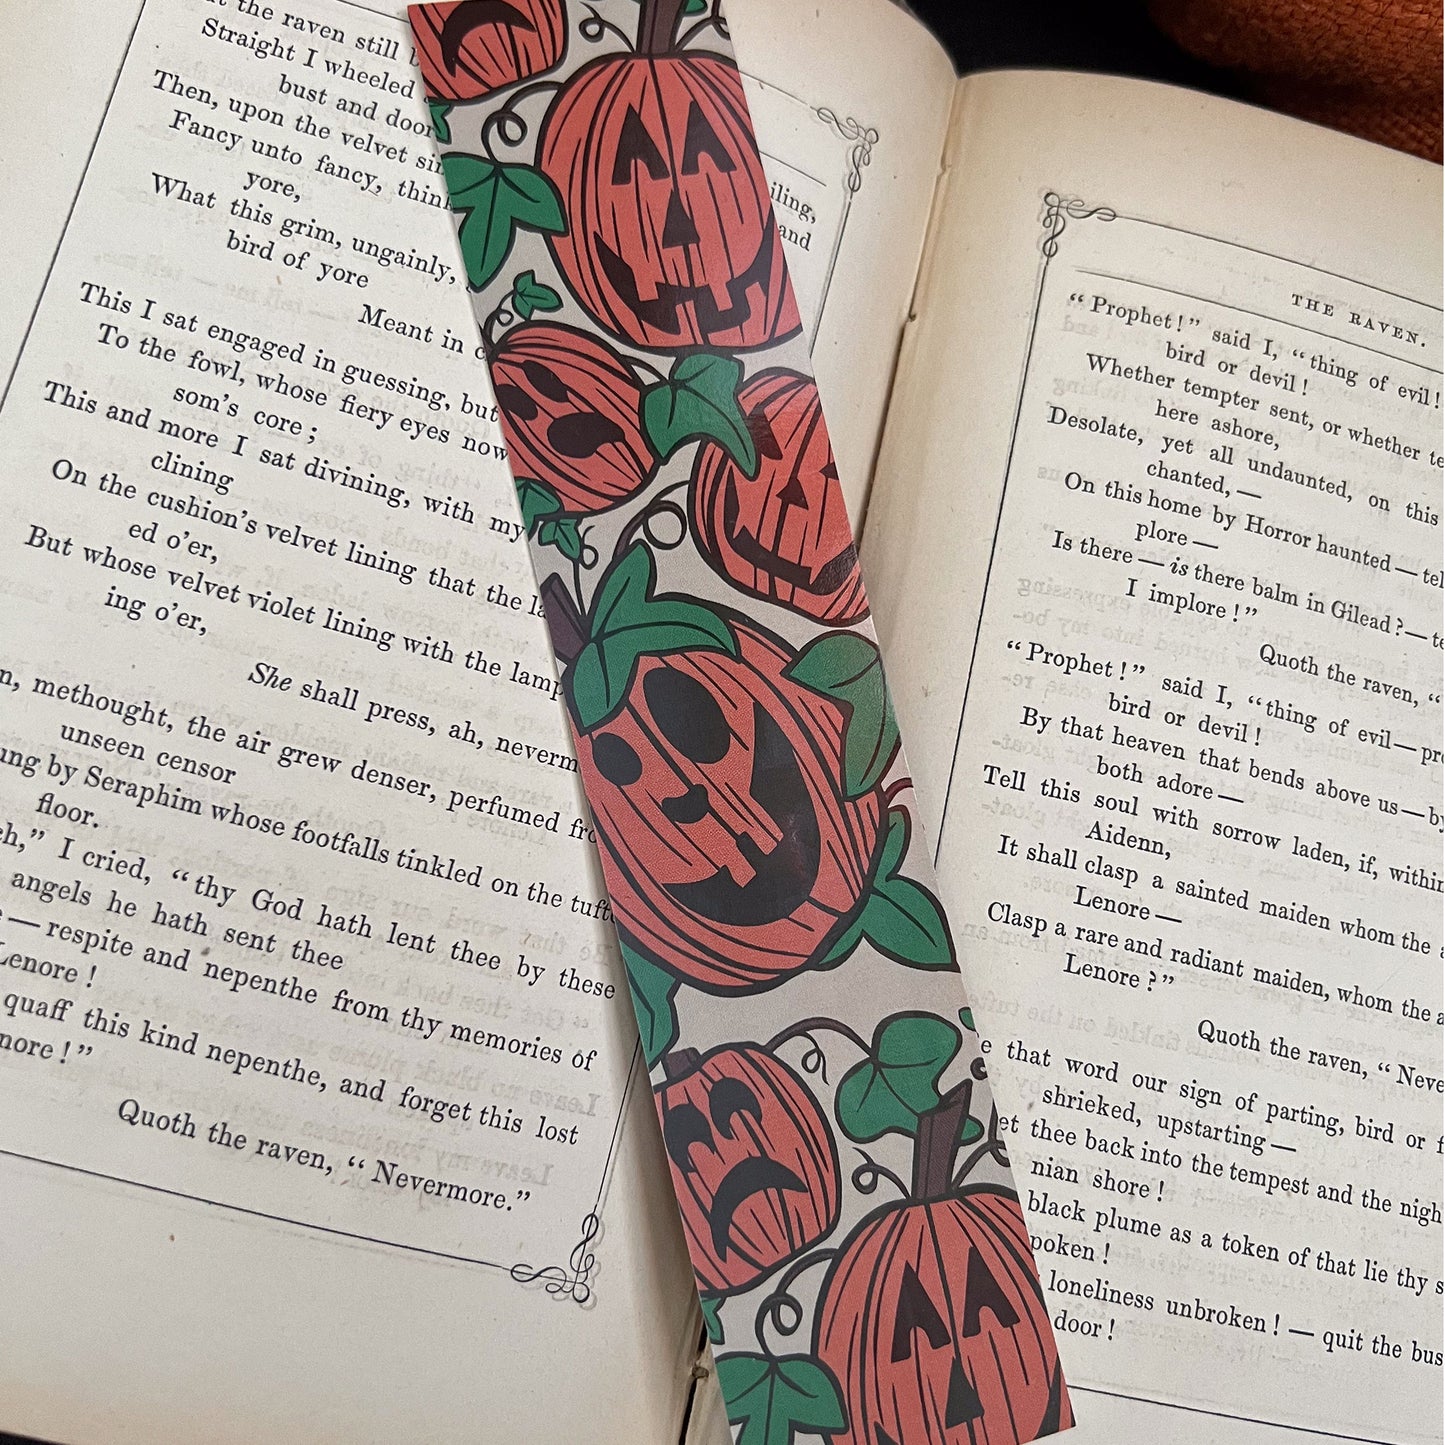 Pumpkin Bookmark